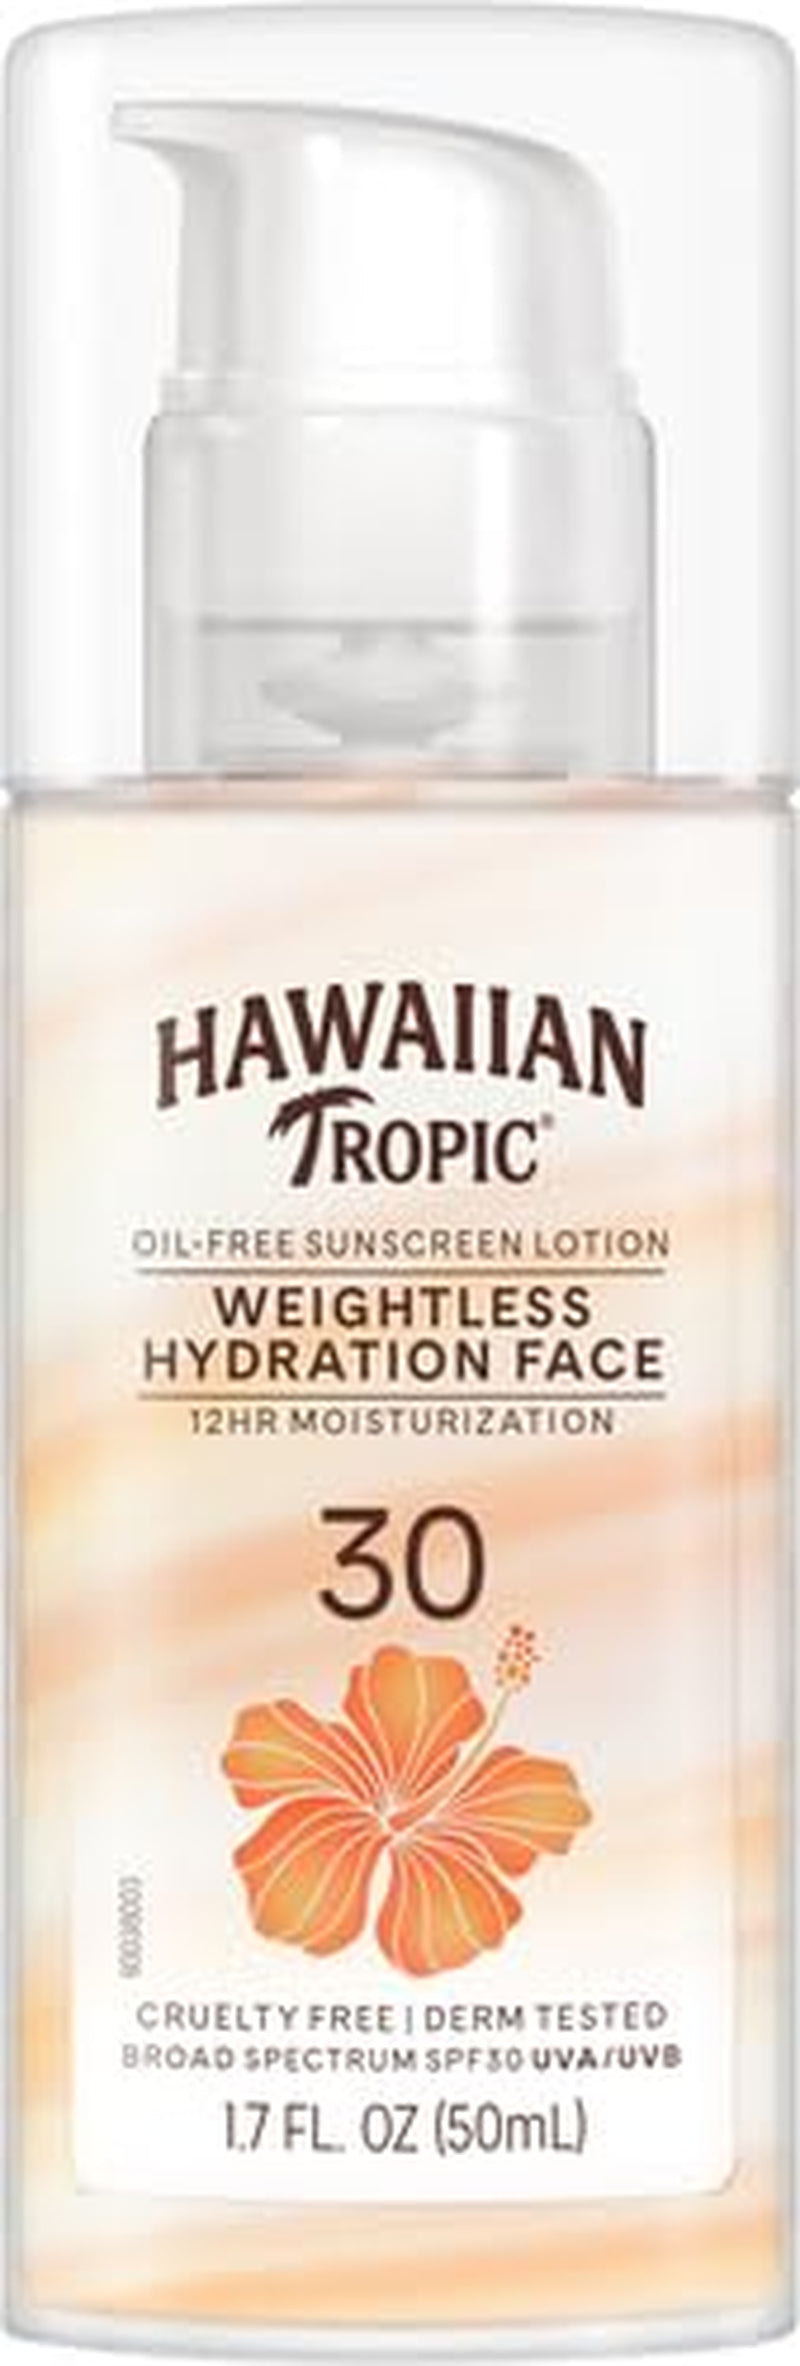 "Travel Size Hawaiian Tropic Weightless Hydration Face Sunscreen SPF 30 - Oil Free and Moisturizing, 1.7oz"